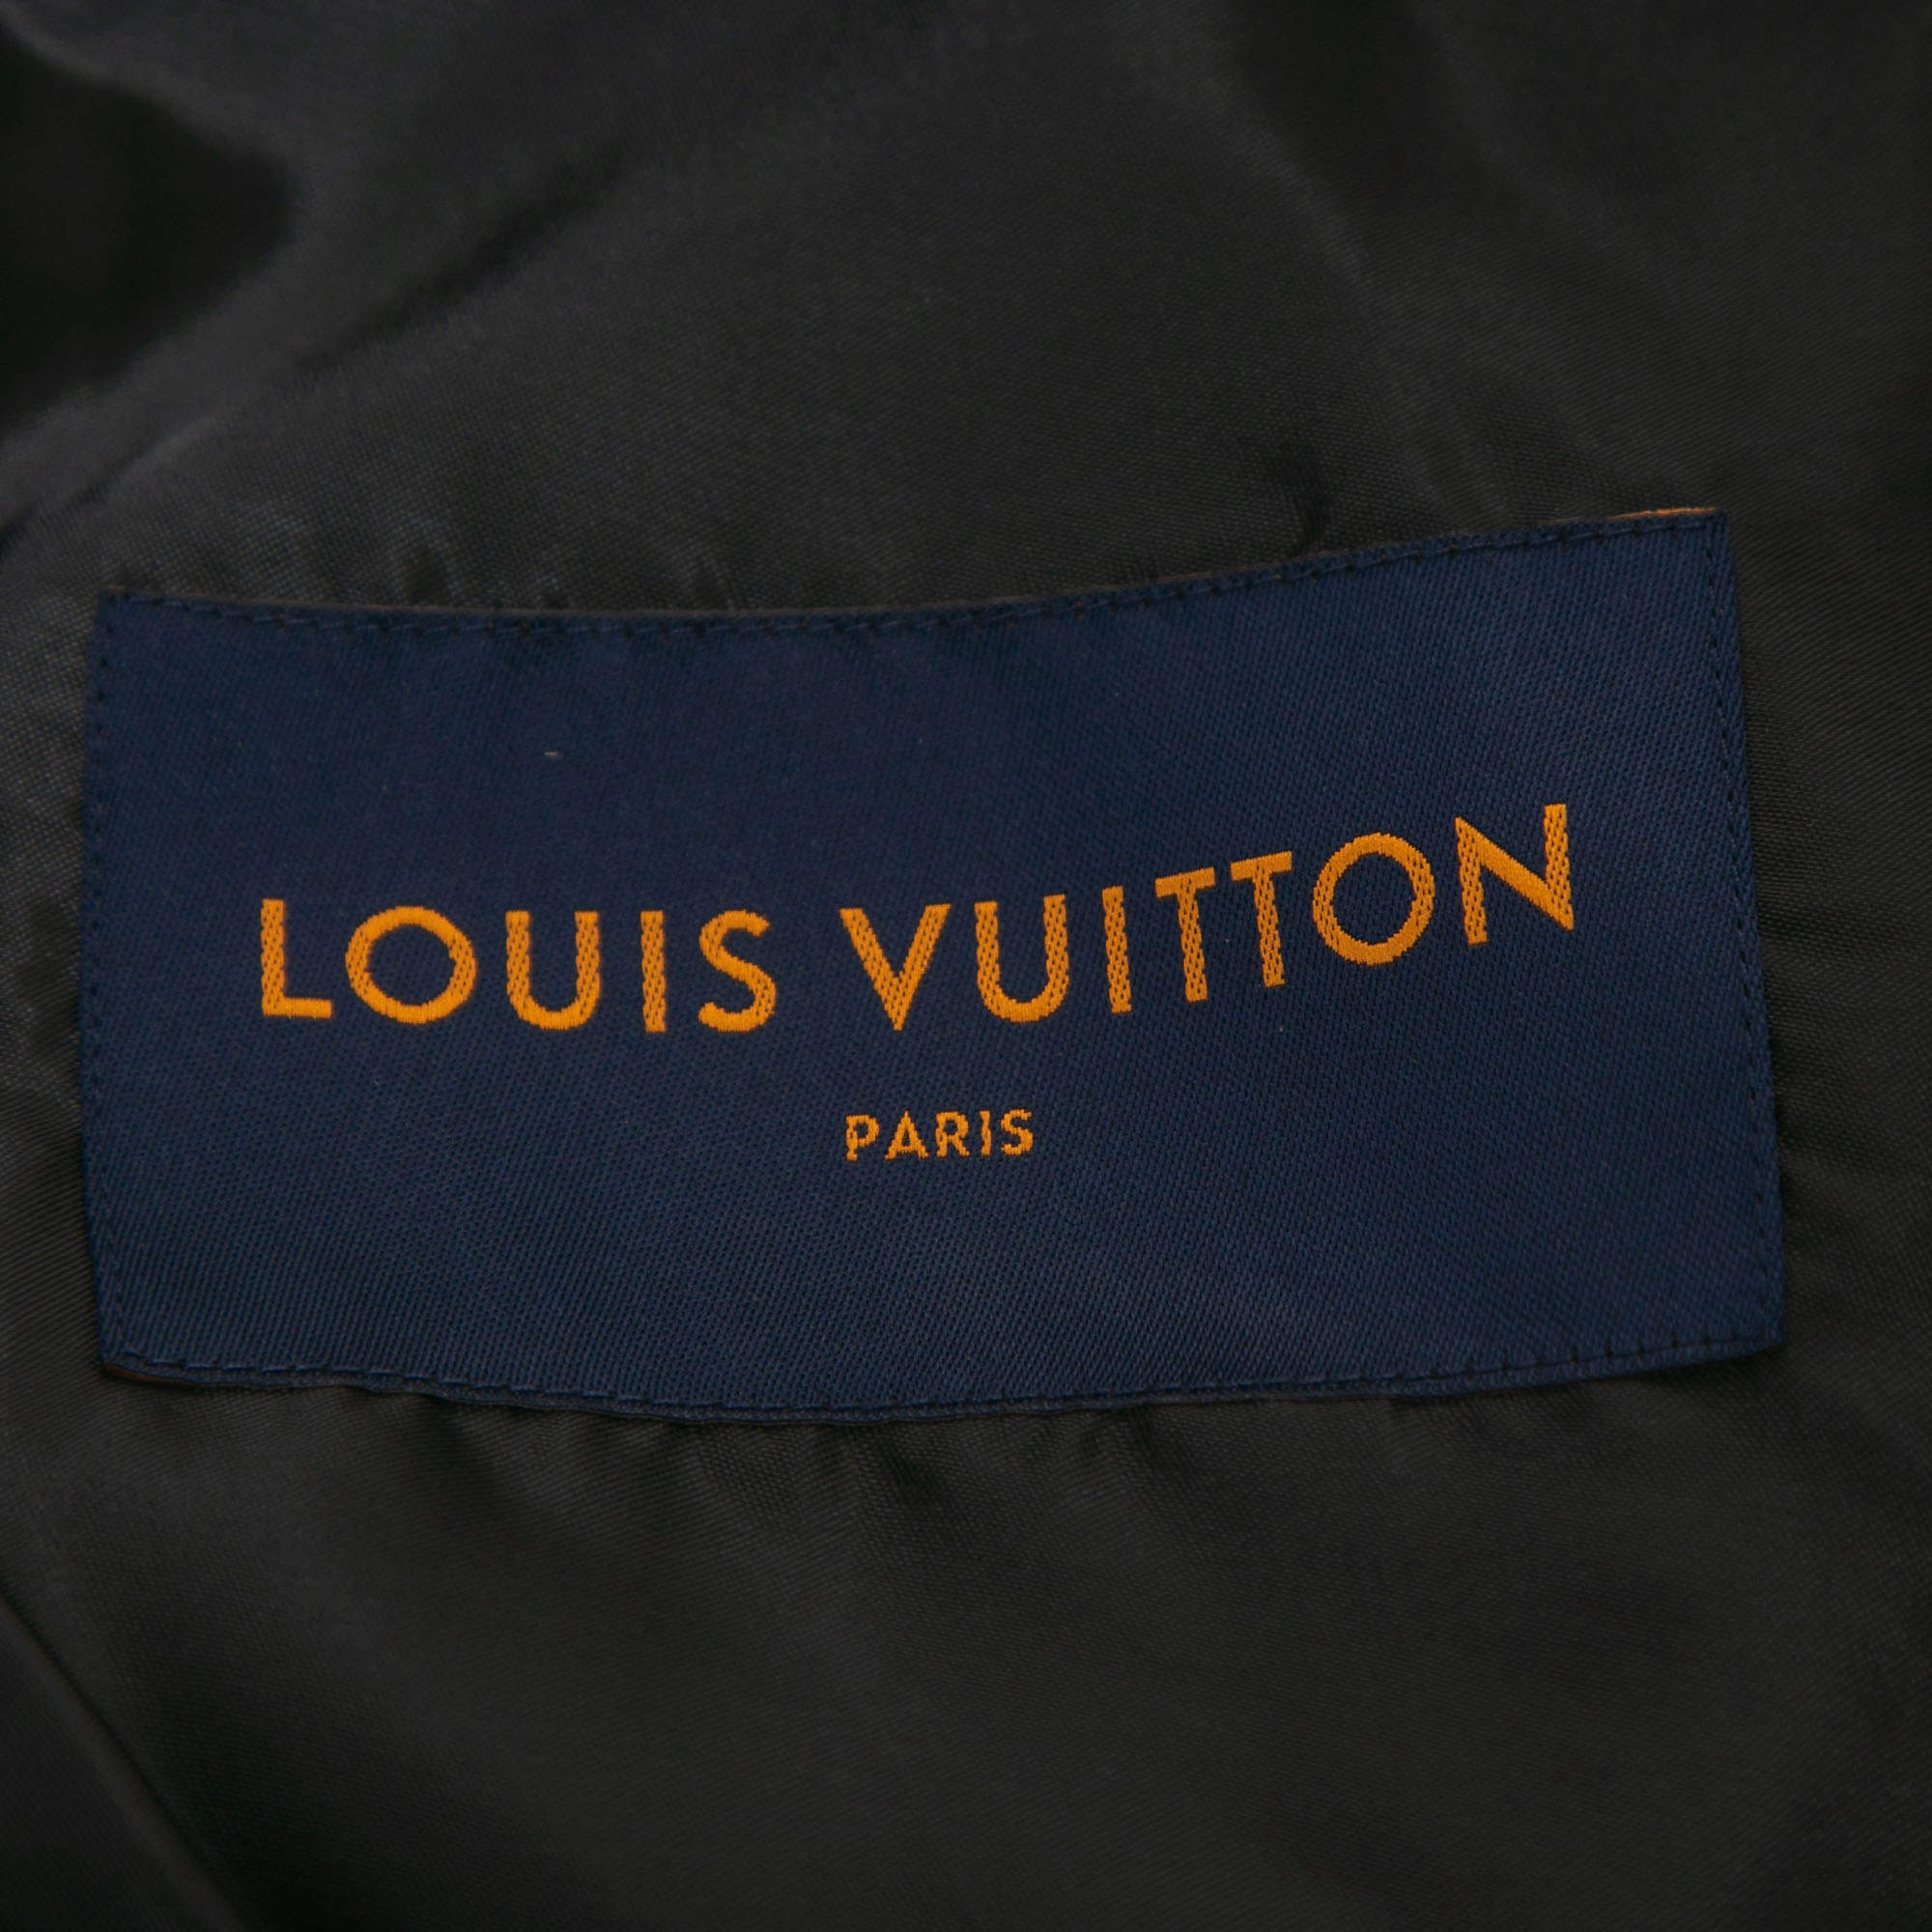 Louis Vuitton Black/White Lambskin Leather Varsity Jacket L Louis Vuitton